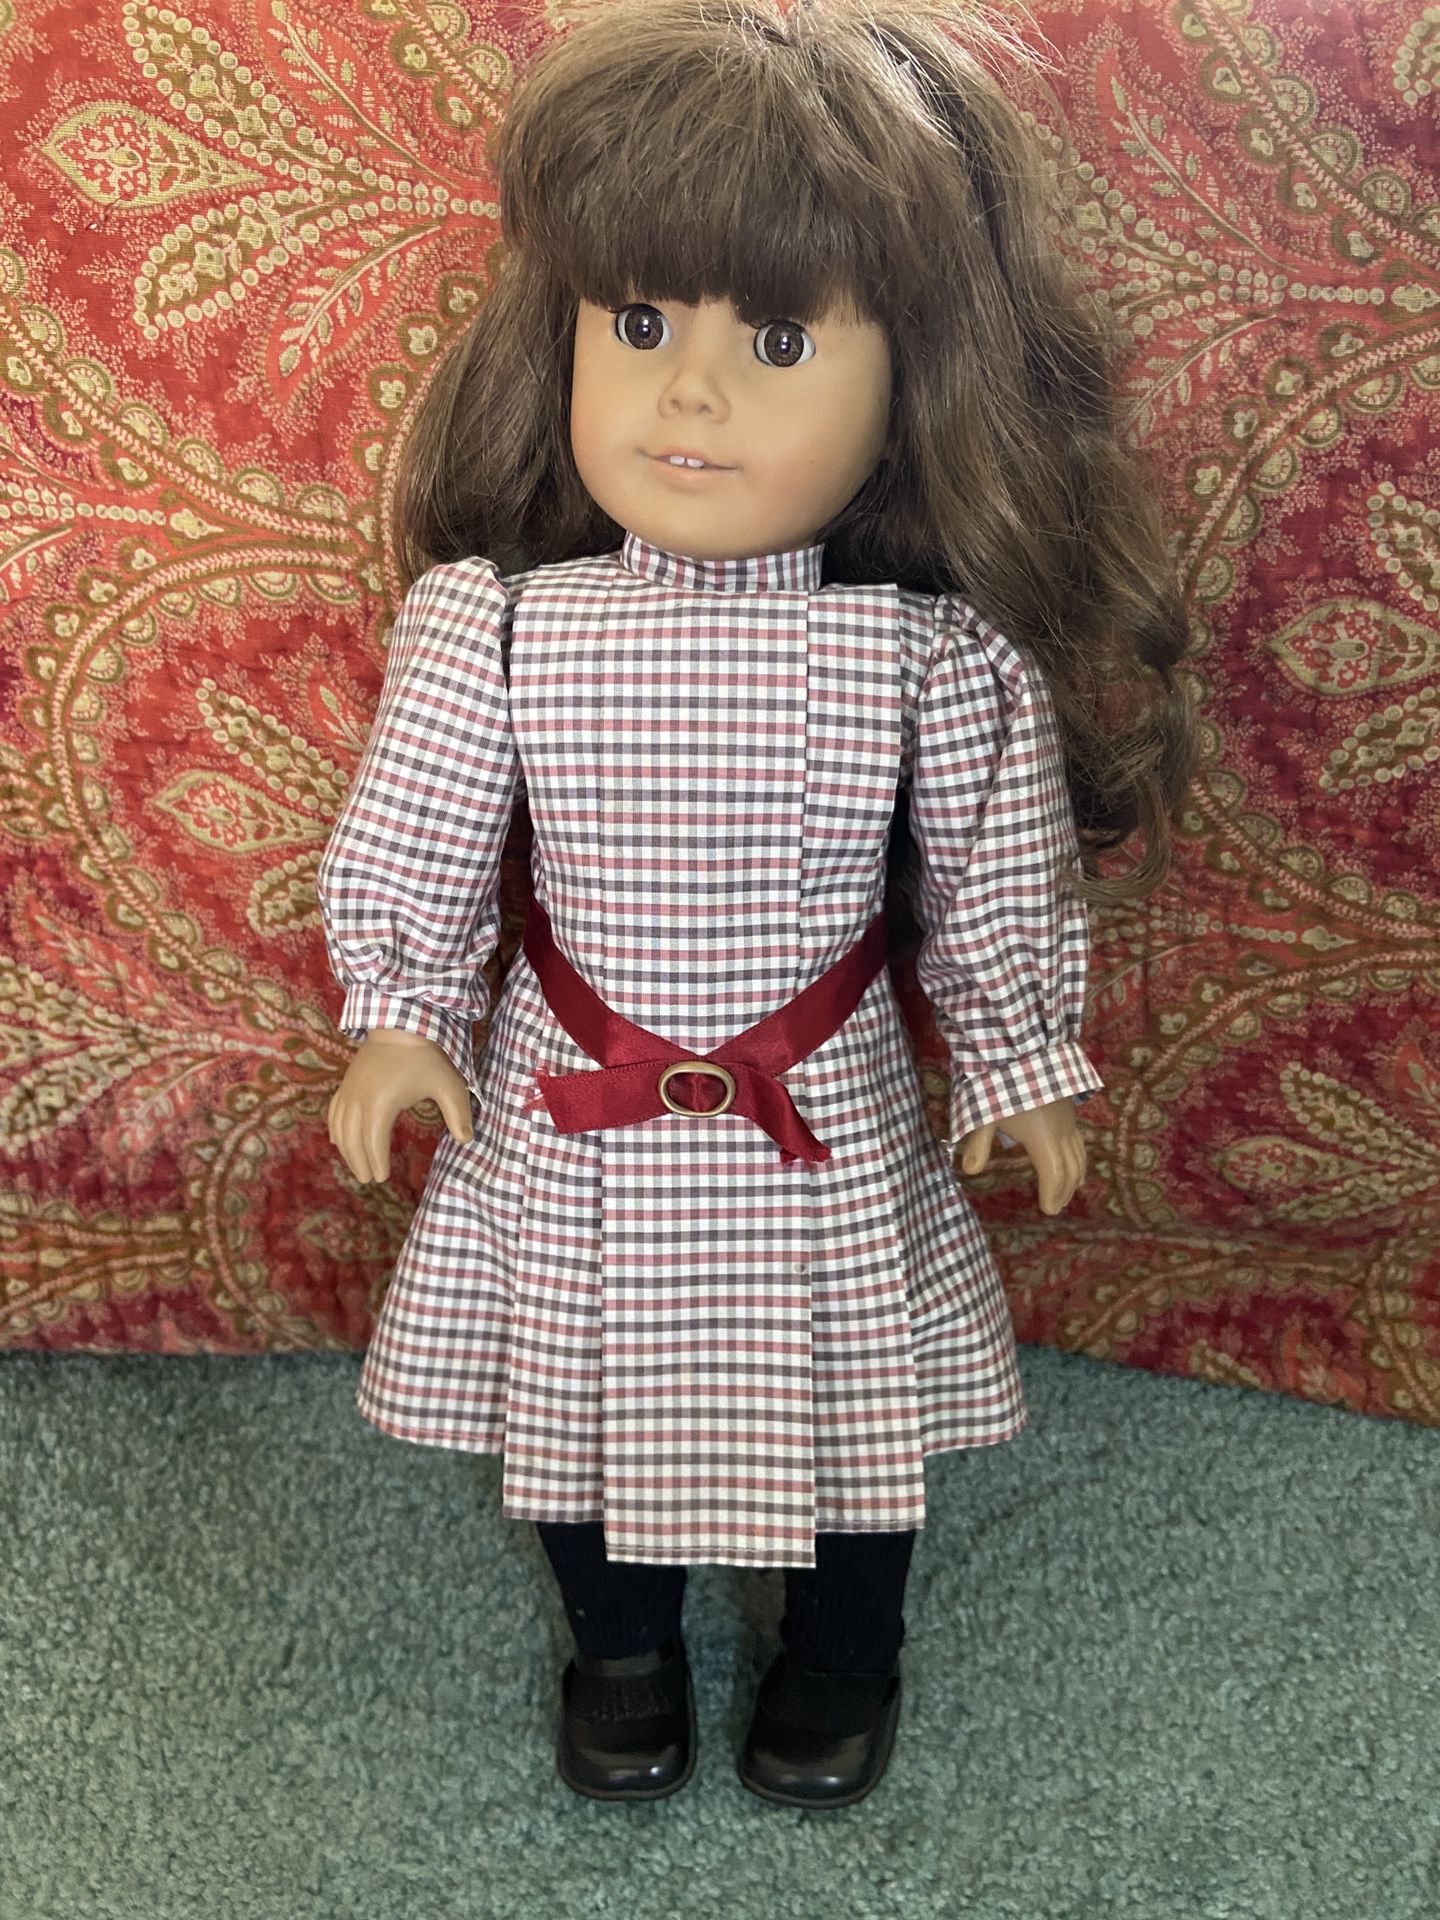 American Girl Samantha PC Doll!